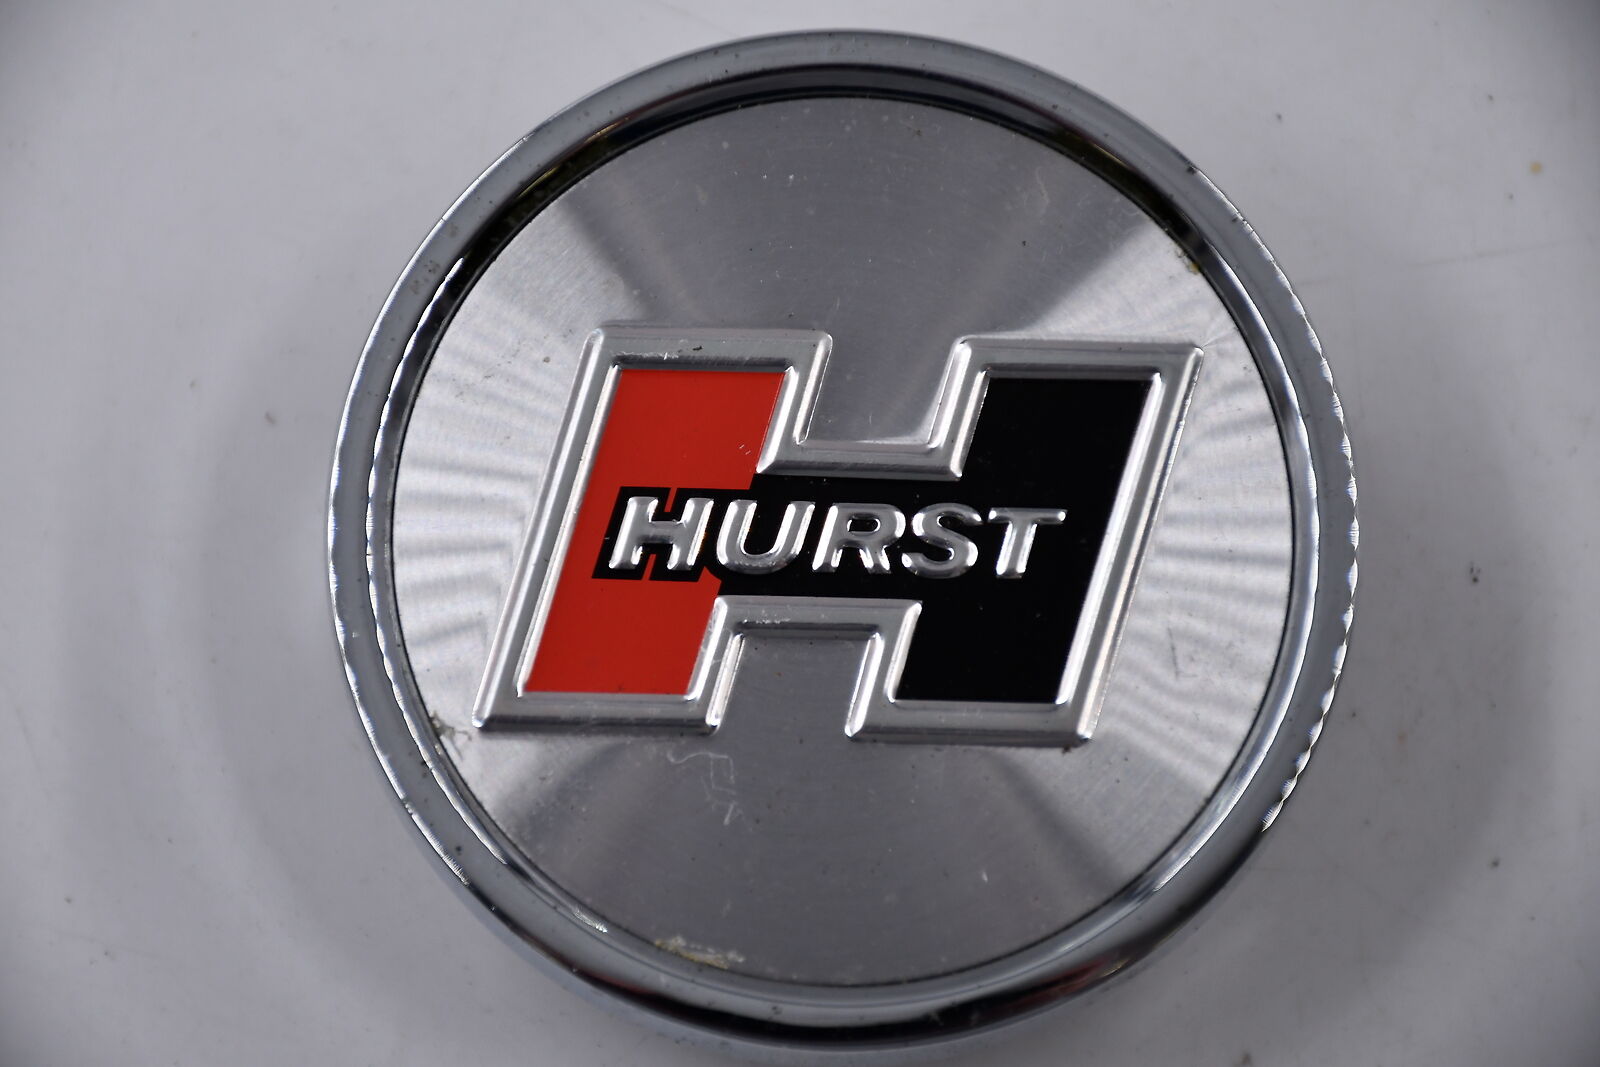 Hurst Racing Wheels Chrome w/ Black, Red, Chrome Logo Wheel Center Cap Hub Cap C